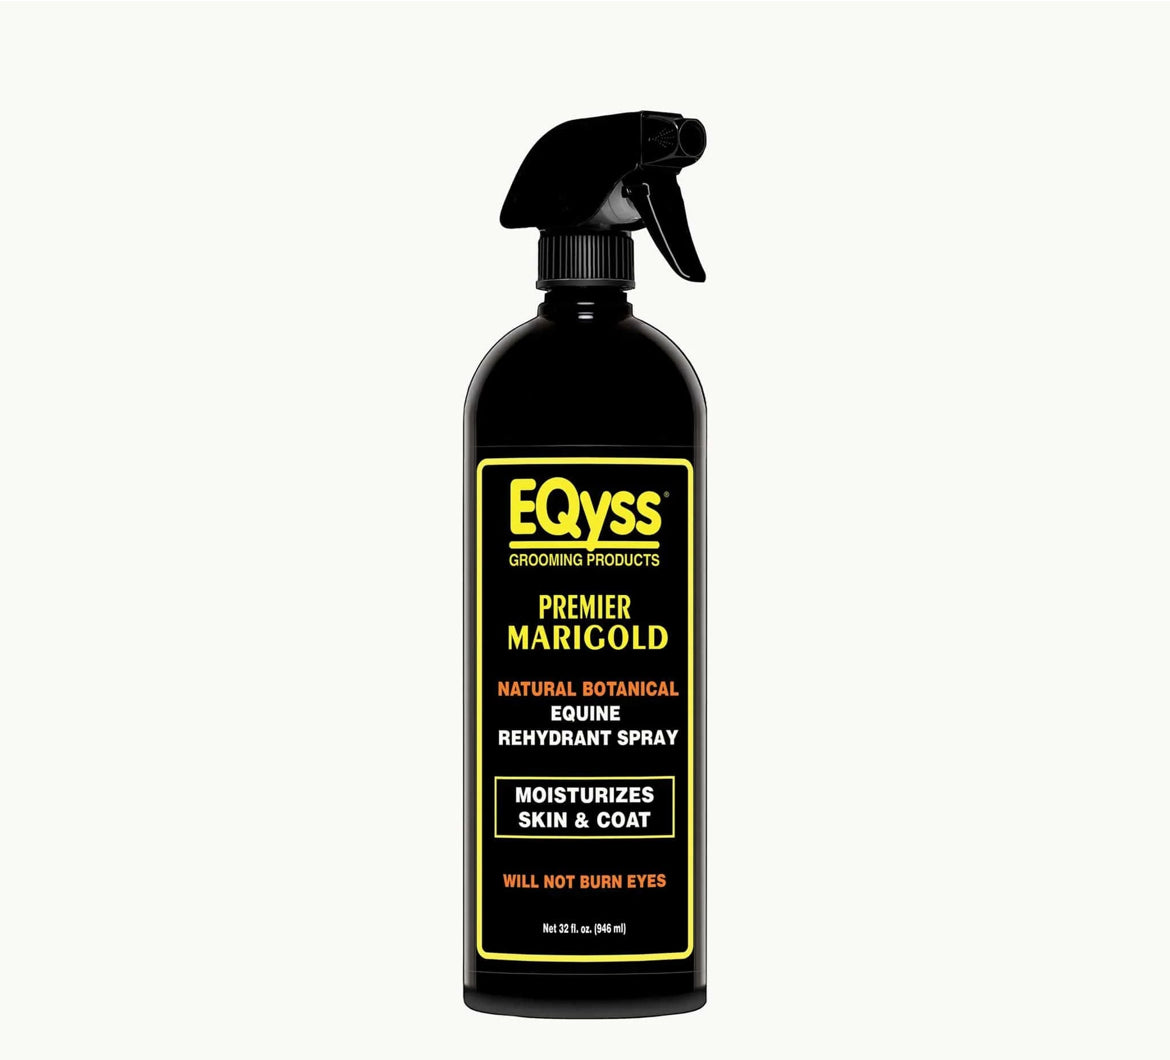 Eqyss marigold spray